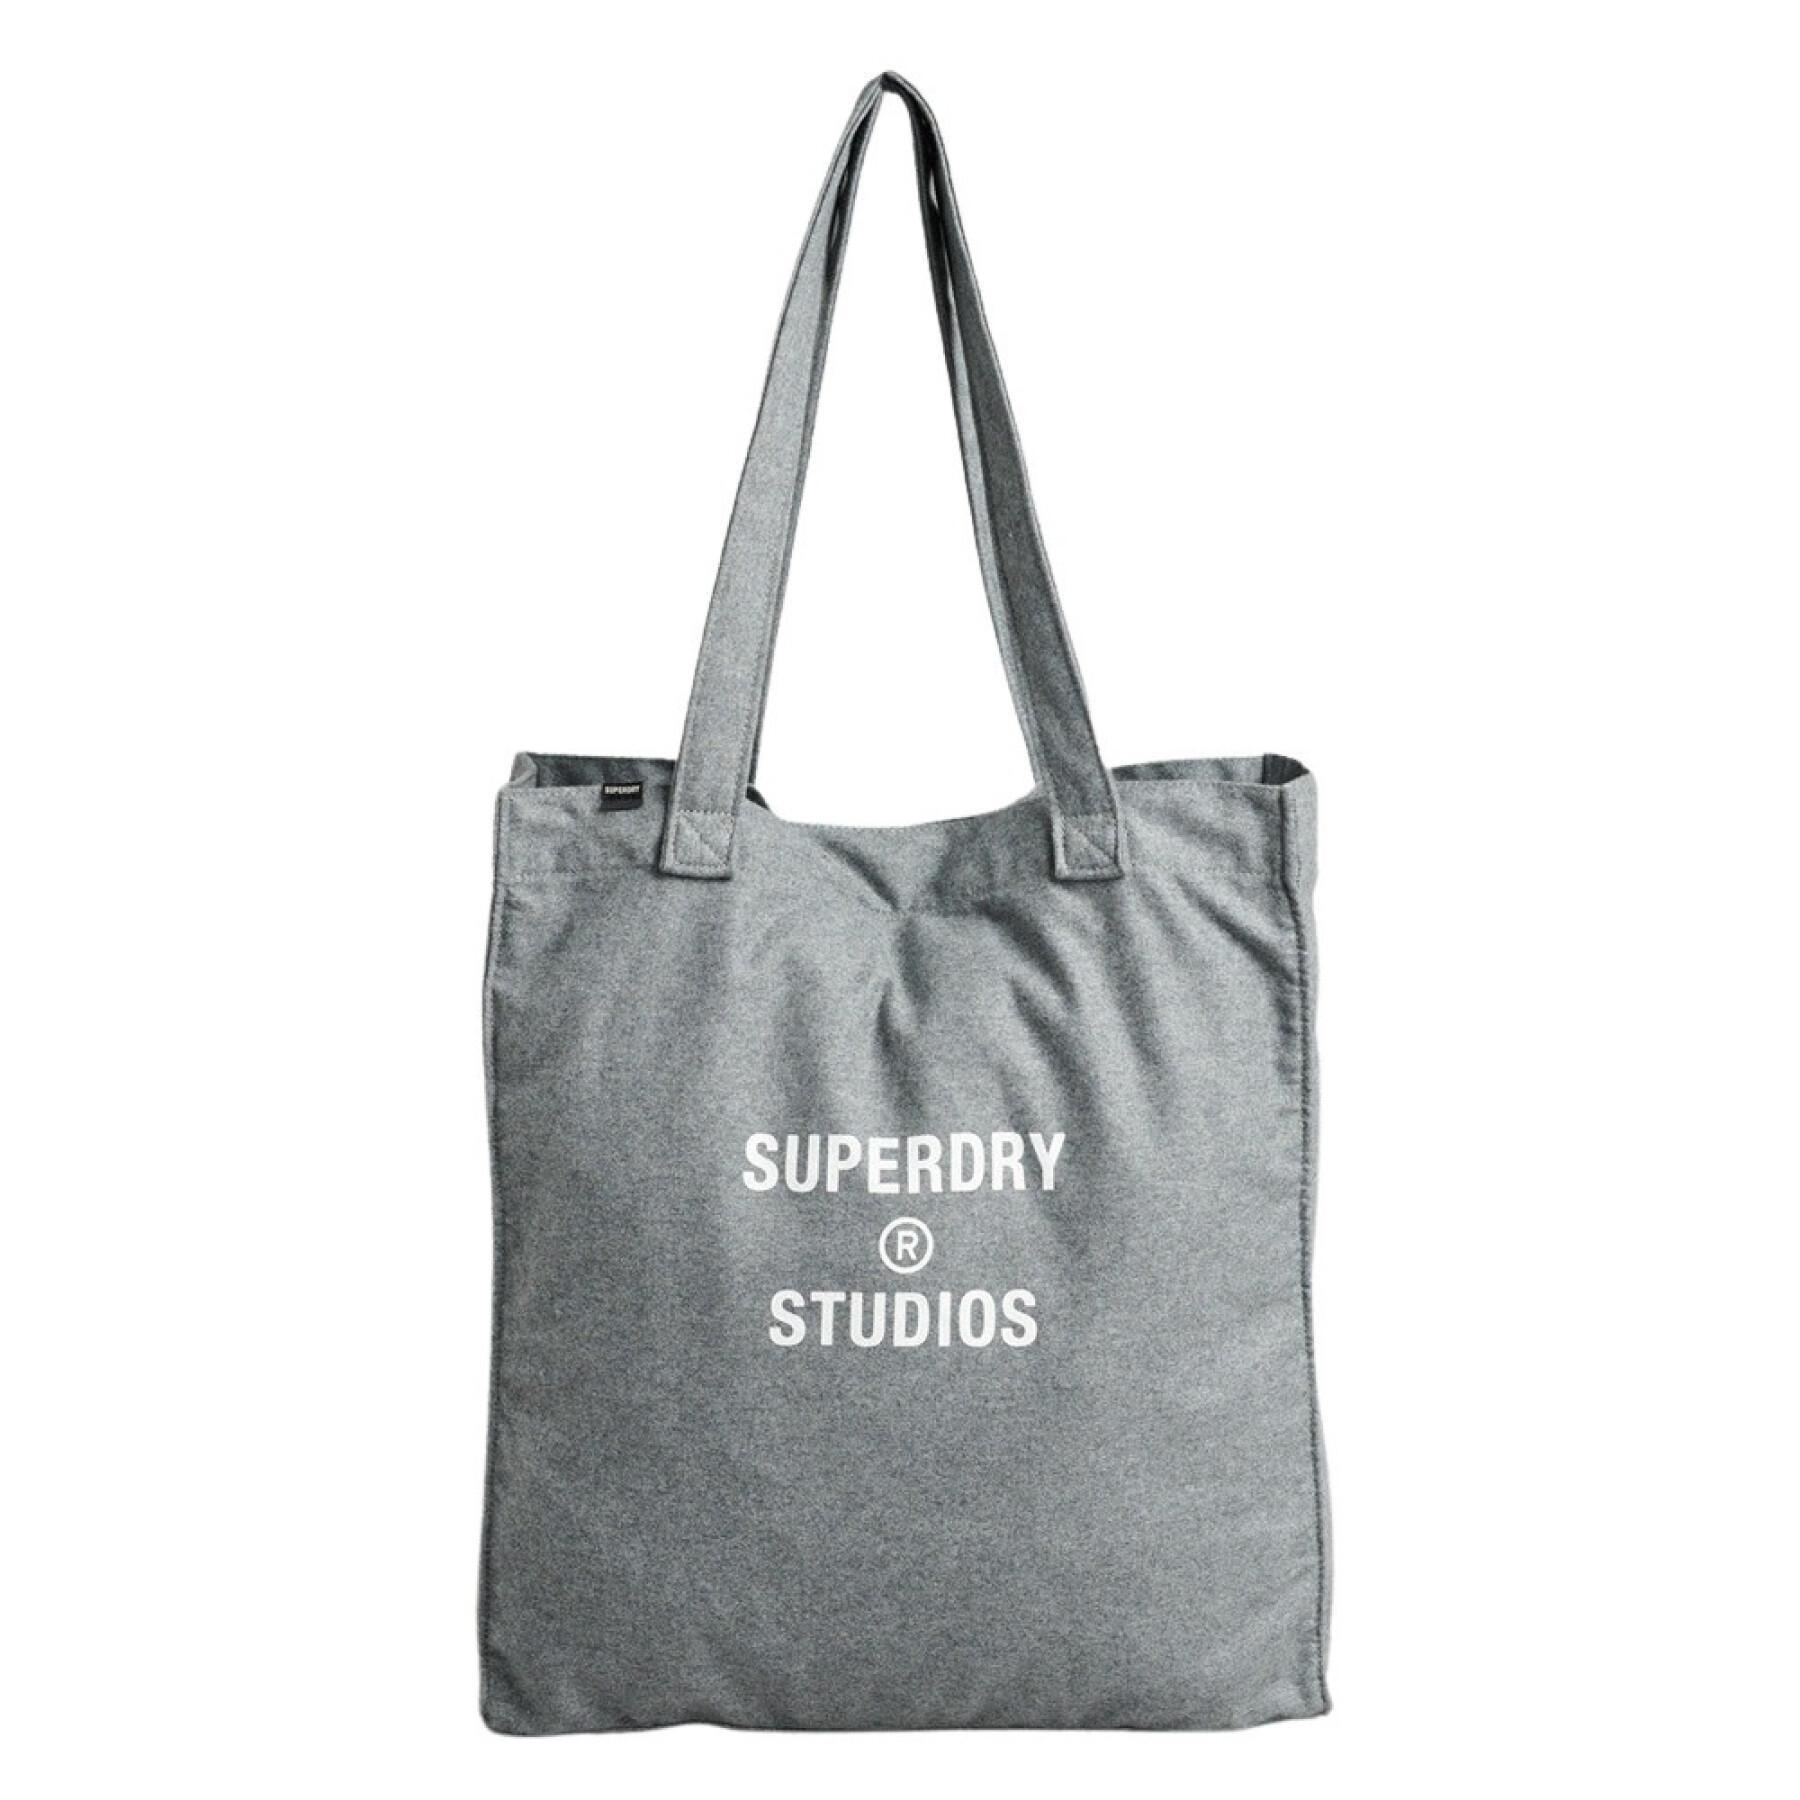 Saco Tote bag Superdry Studio